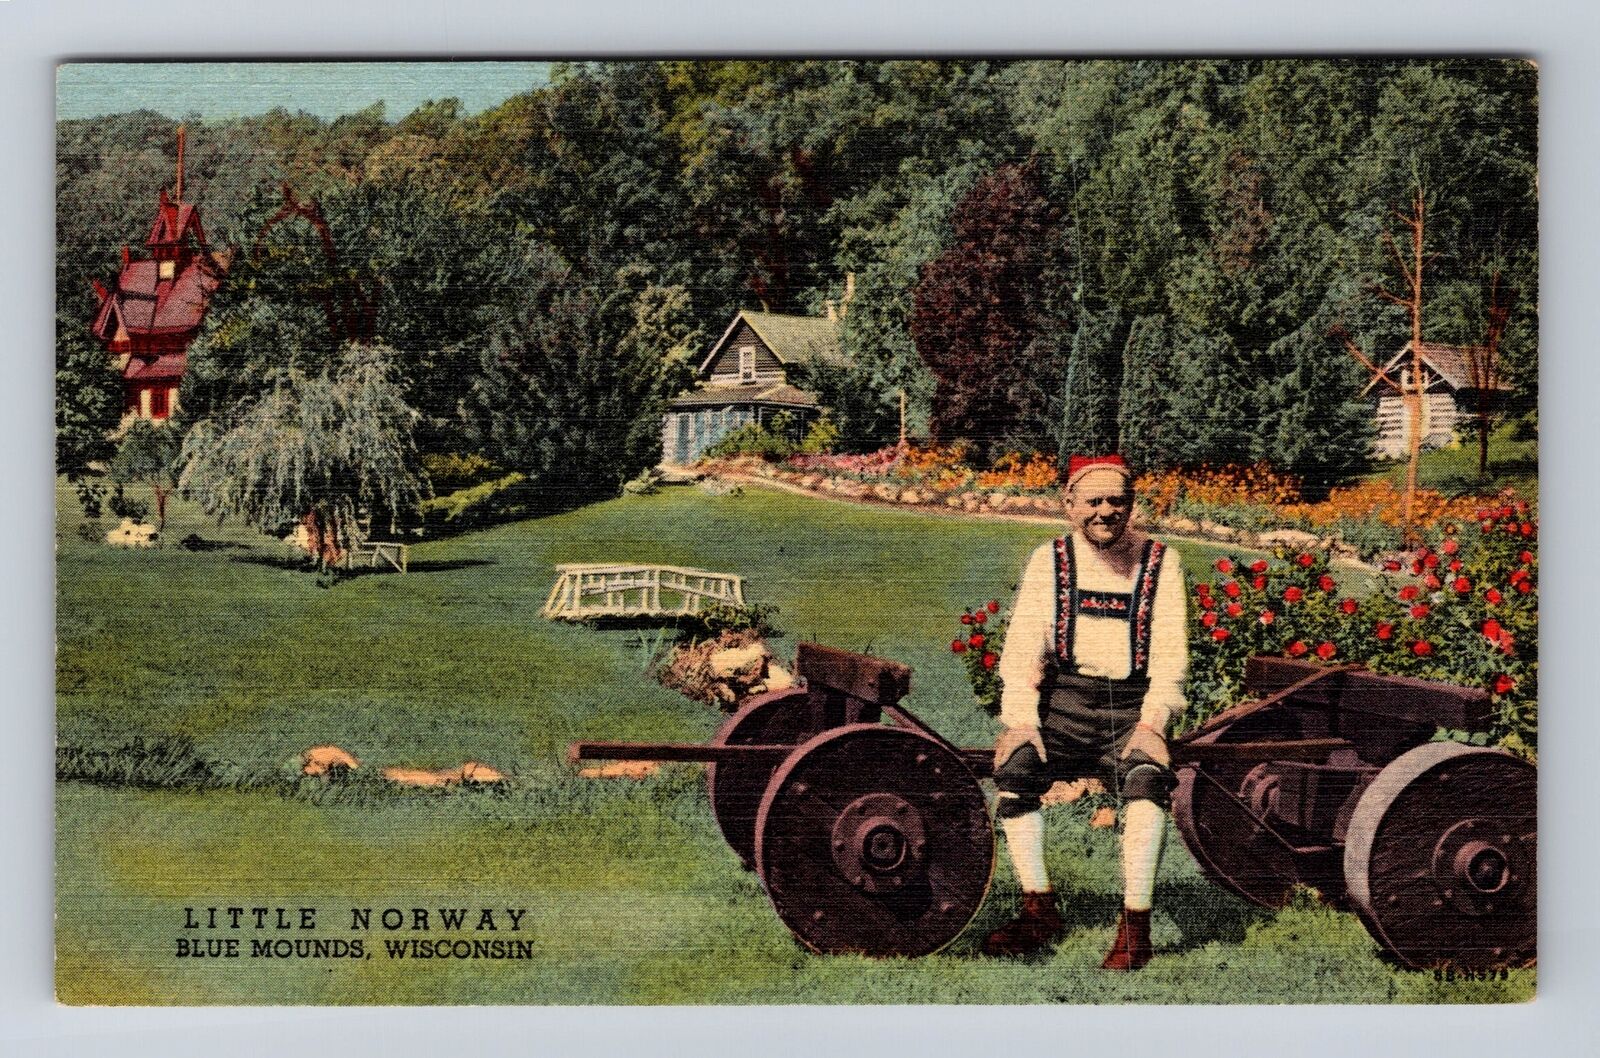 Blue Mounds WI-Wisconsin, Little Norway, Gardening Antique, Vintage Postcard